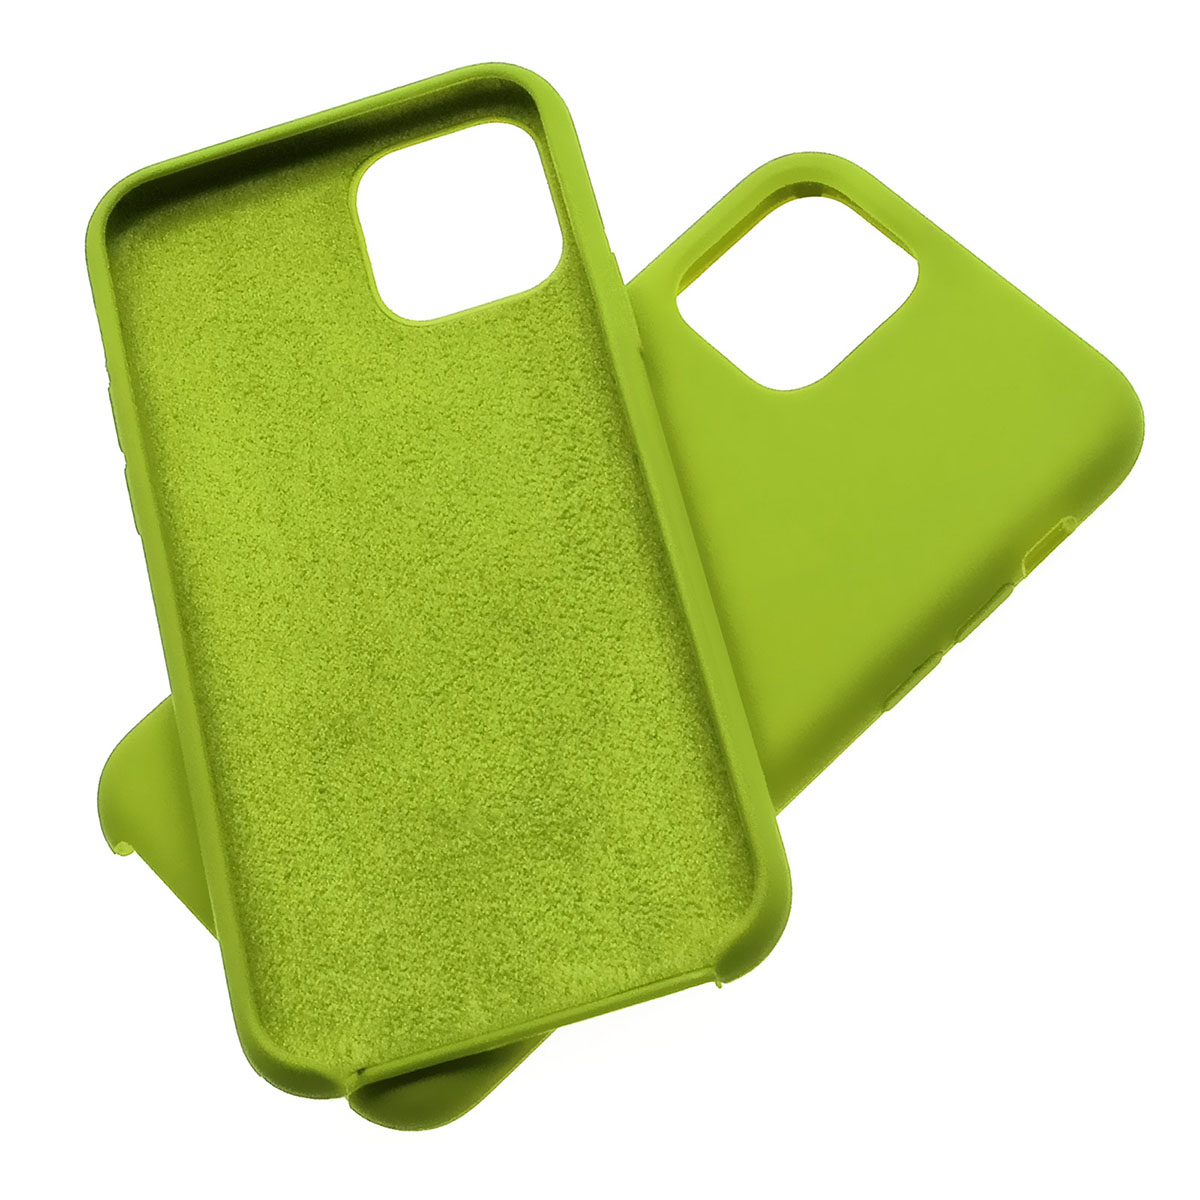 Чехол накладка Silicon Case для APPLE iPhone 11 Pro MAX 2019, силикон, бархат, цвет зеленый.